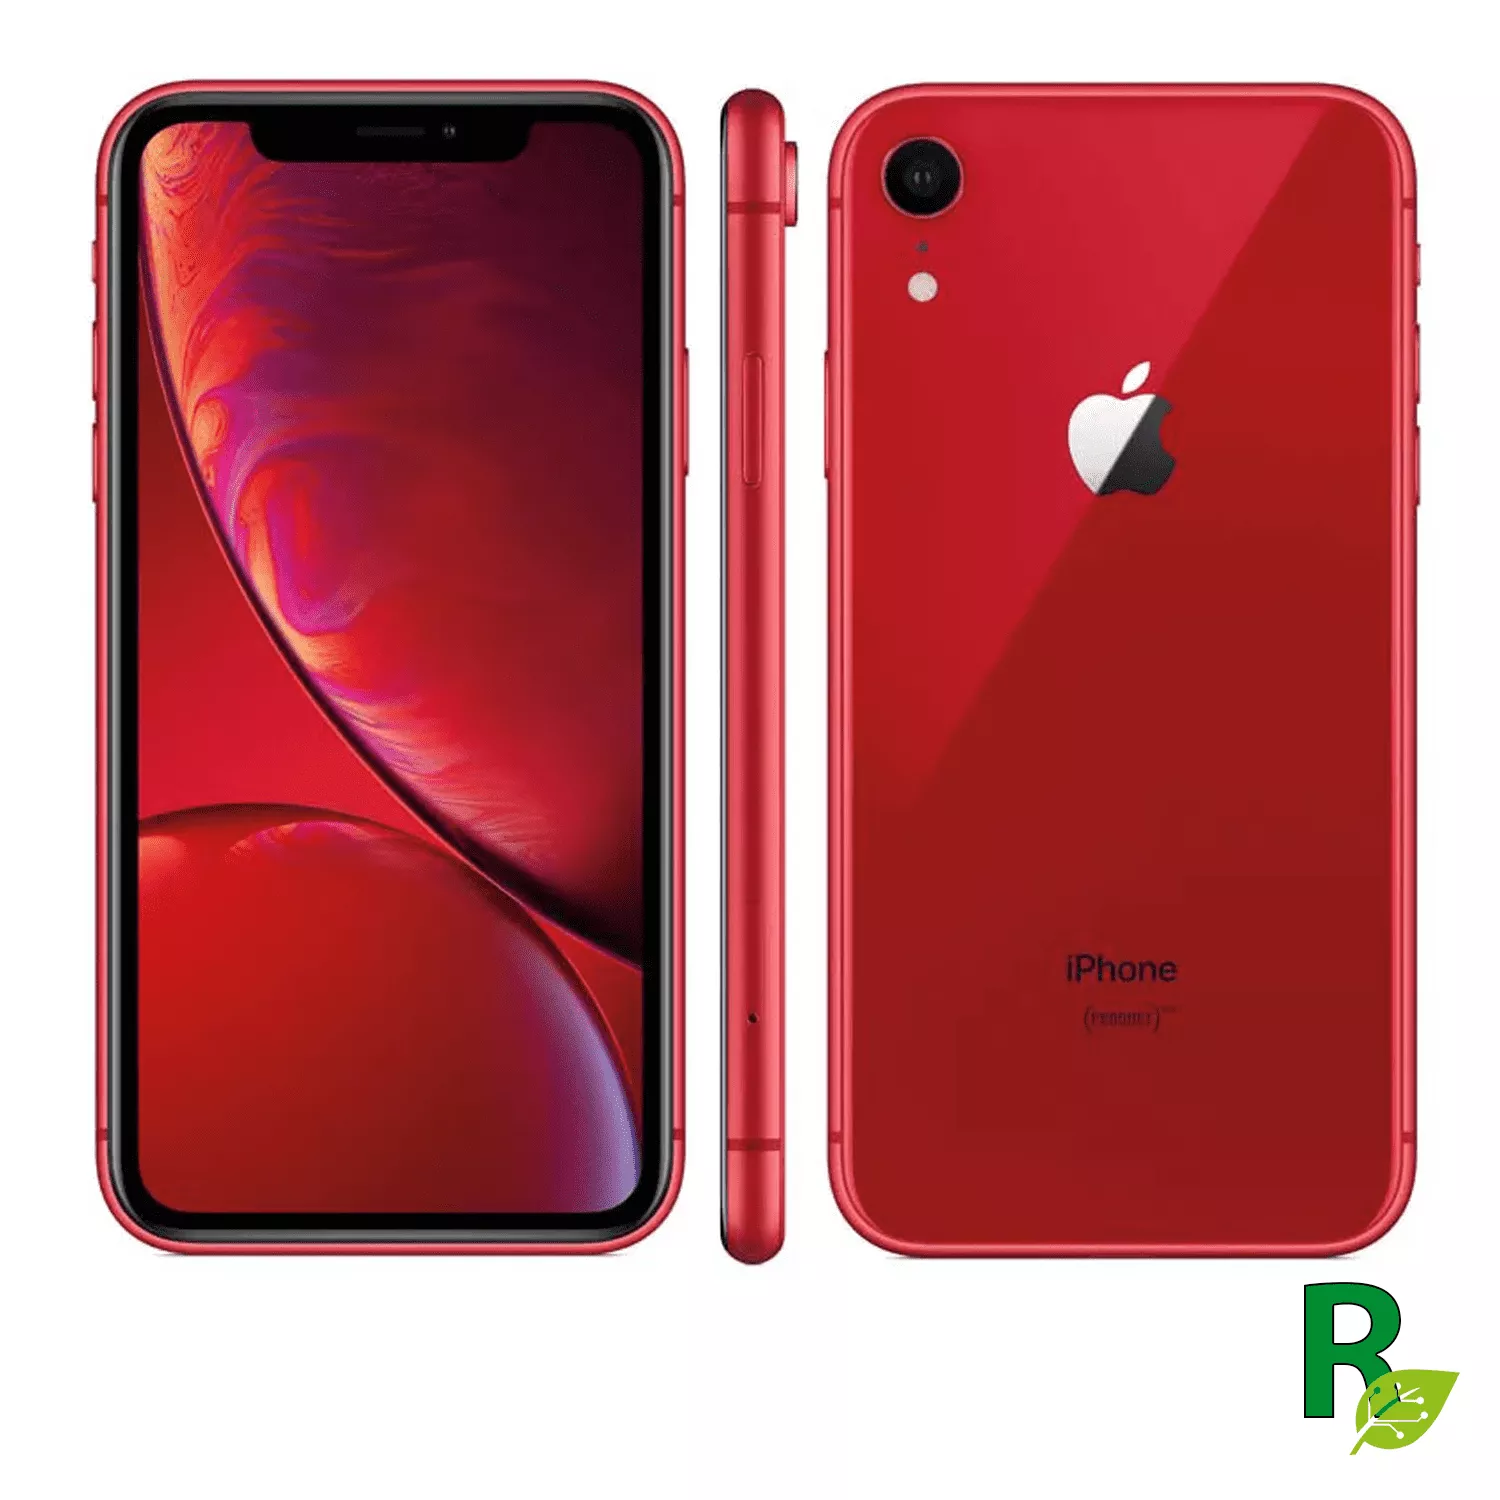 iPhone XR 64GB - Rojo - XRRED64AB - Cat. AB  XR64IPH5-Reacondicionado